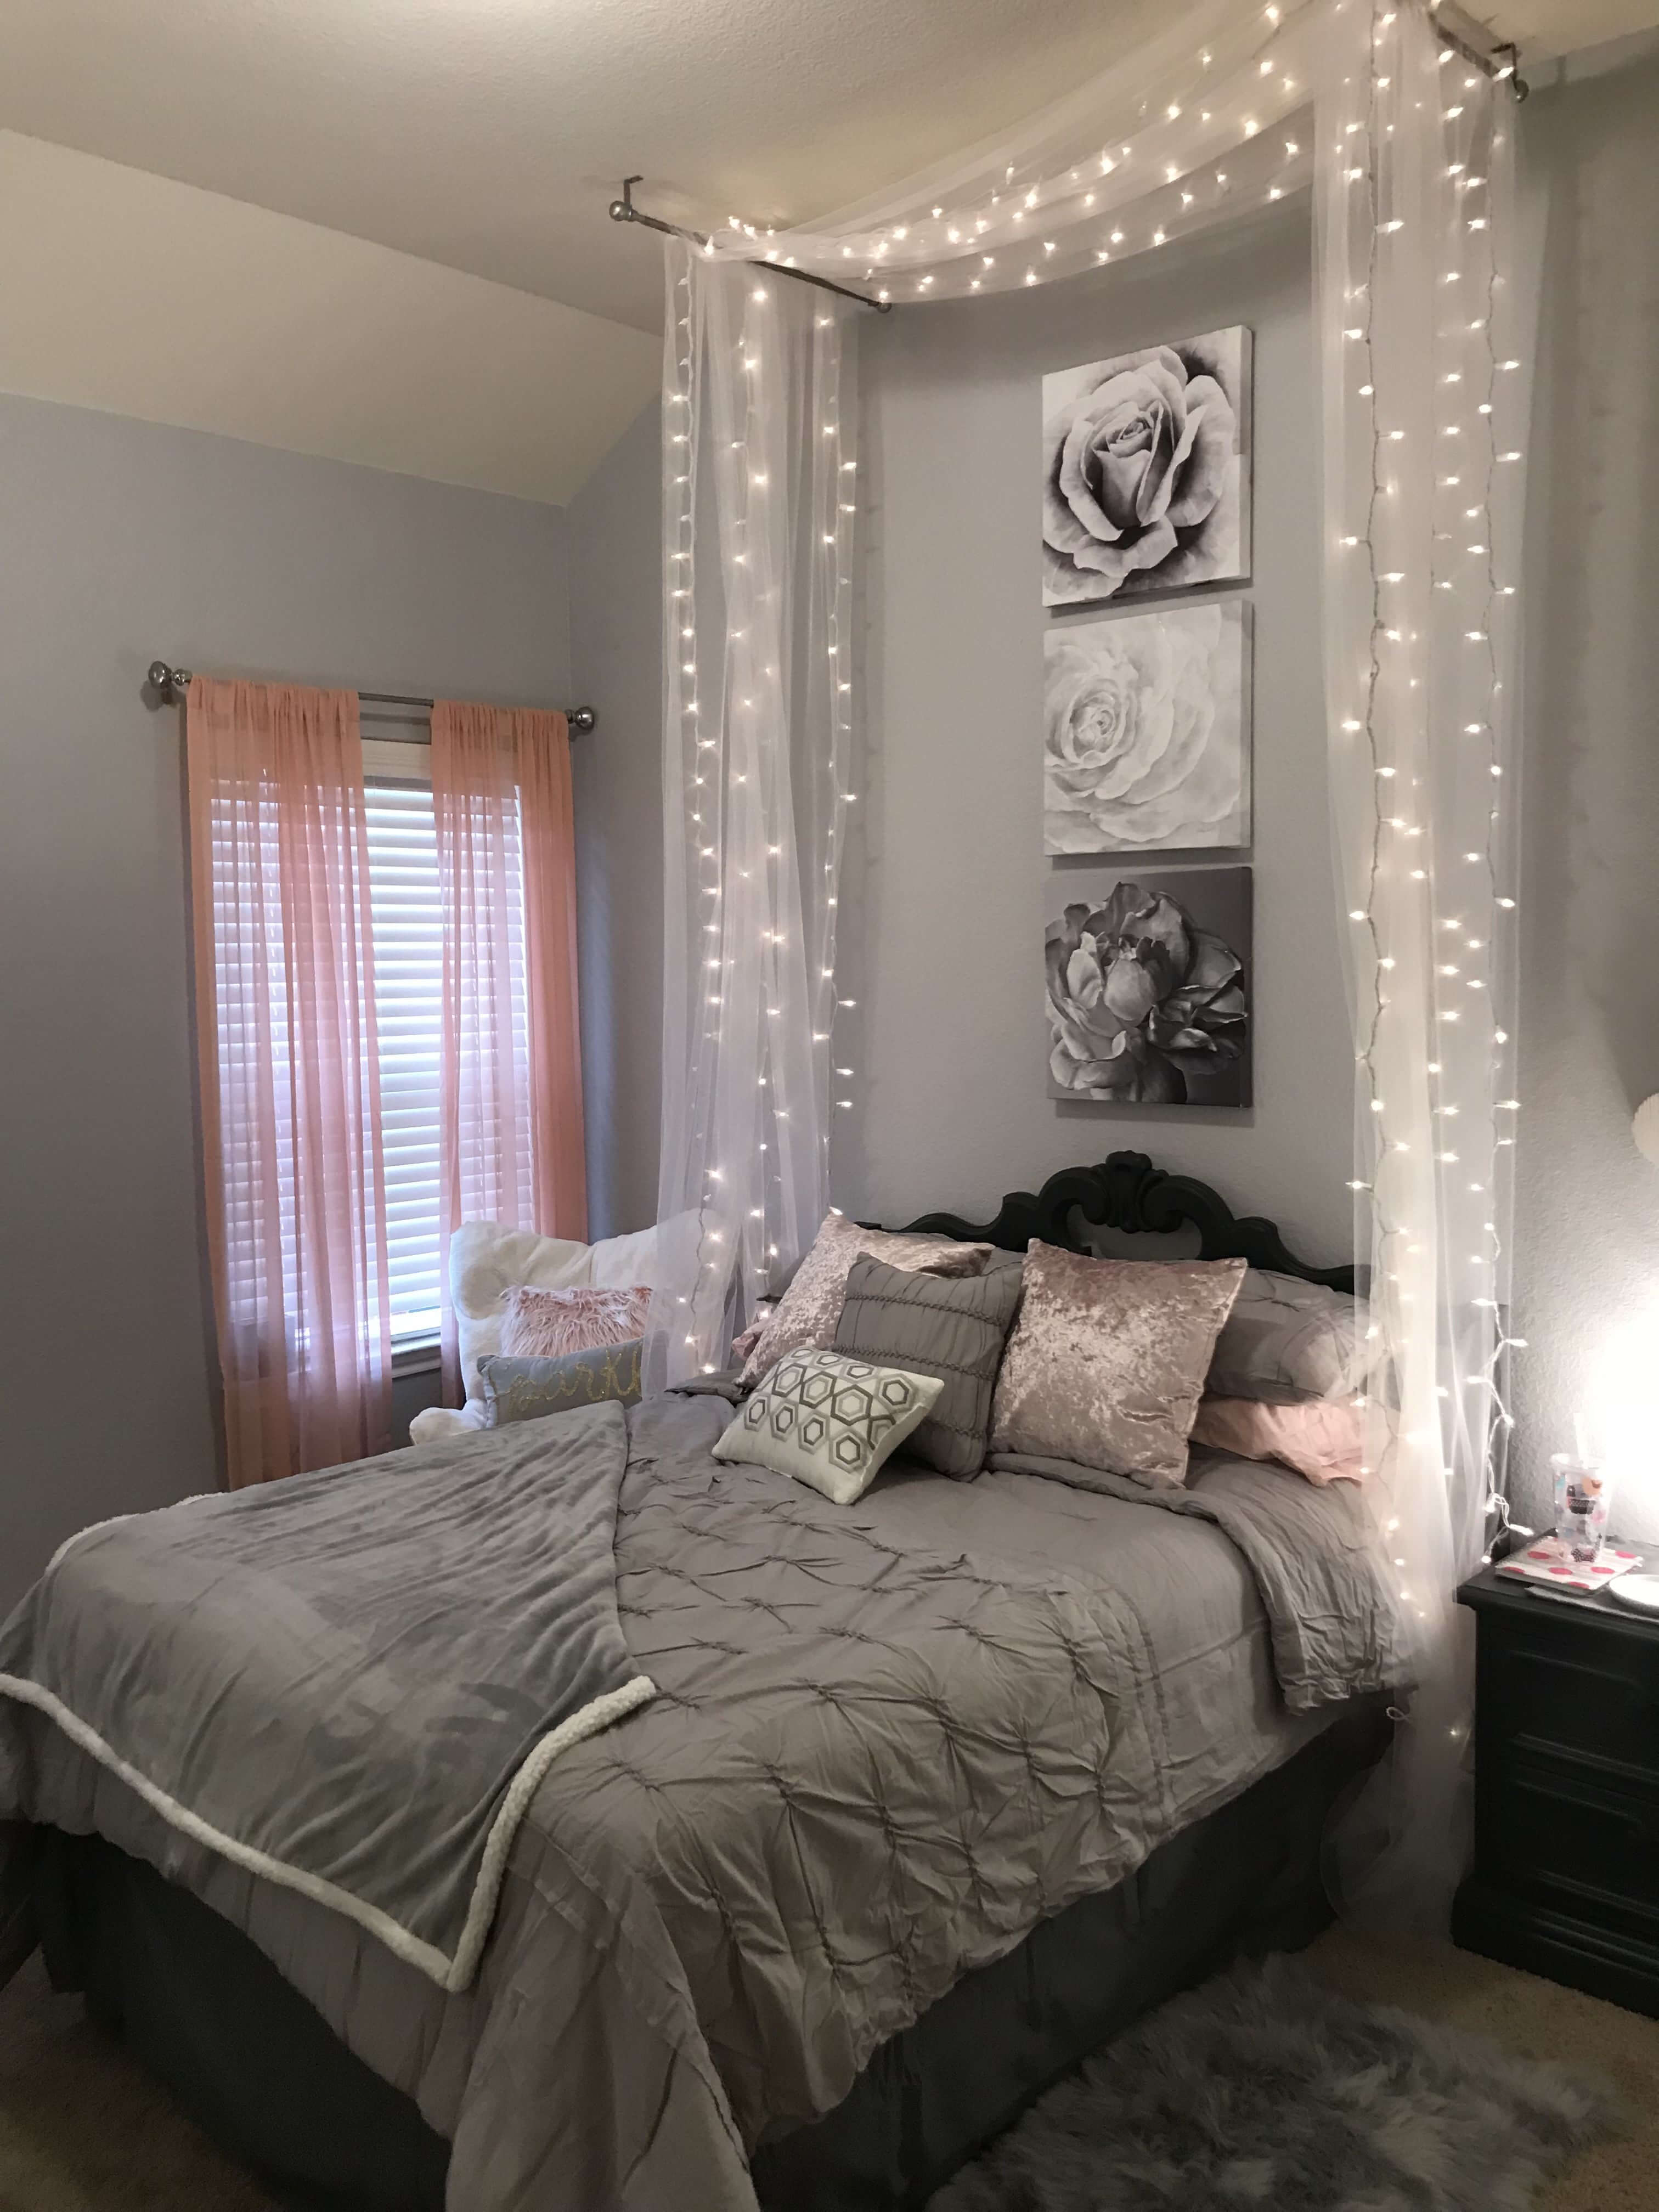 Personalized Bedroom Decor